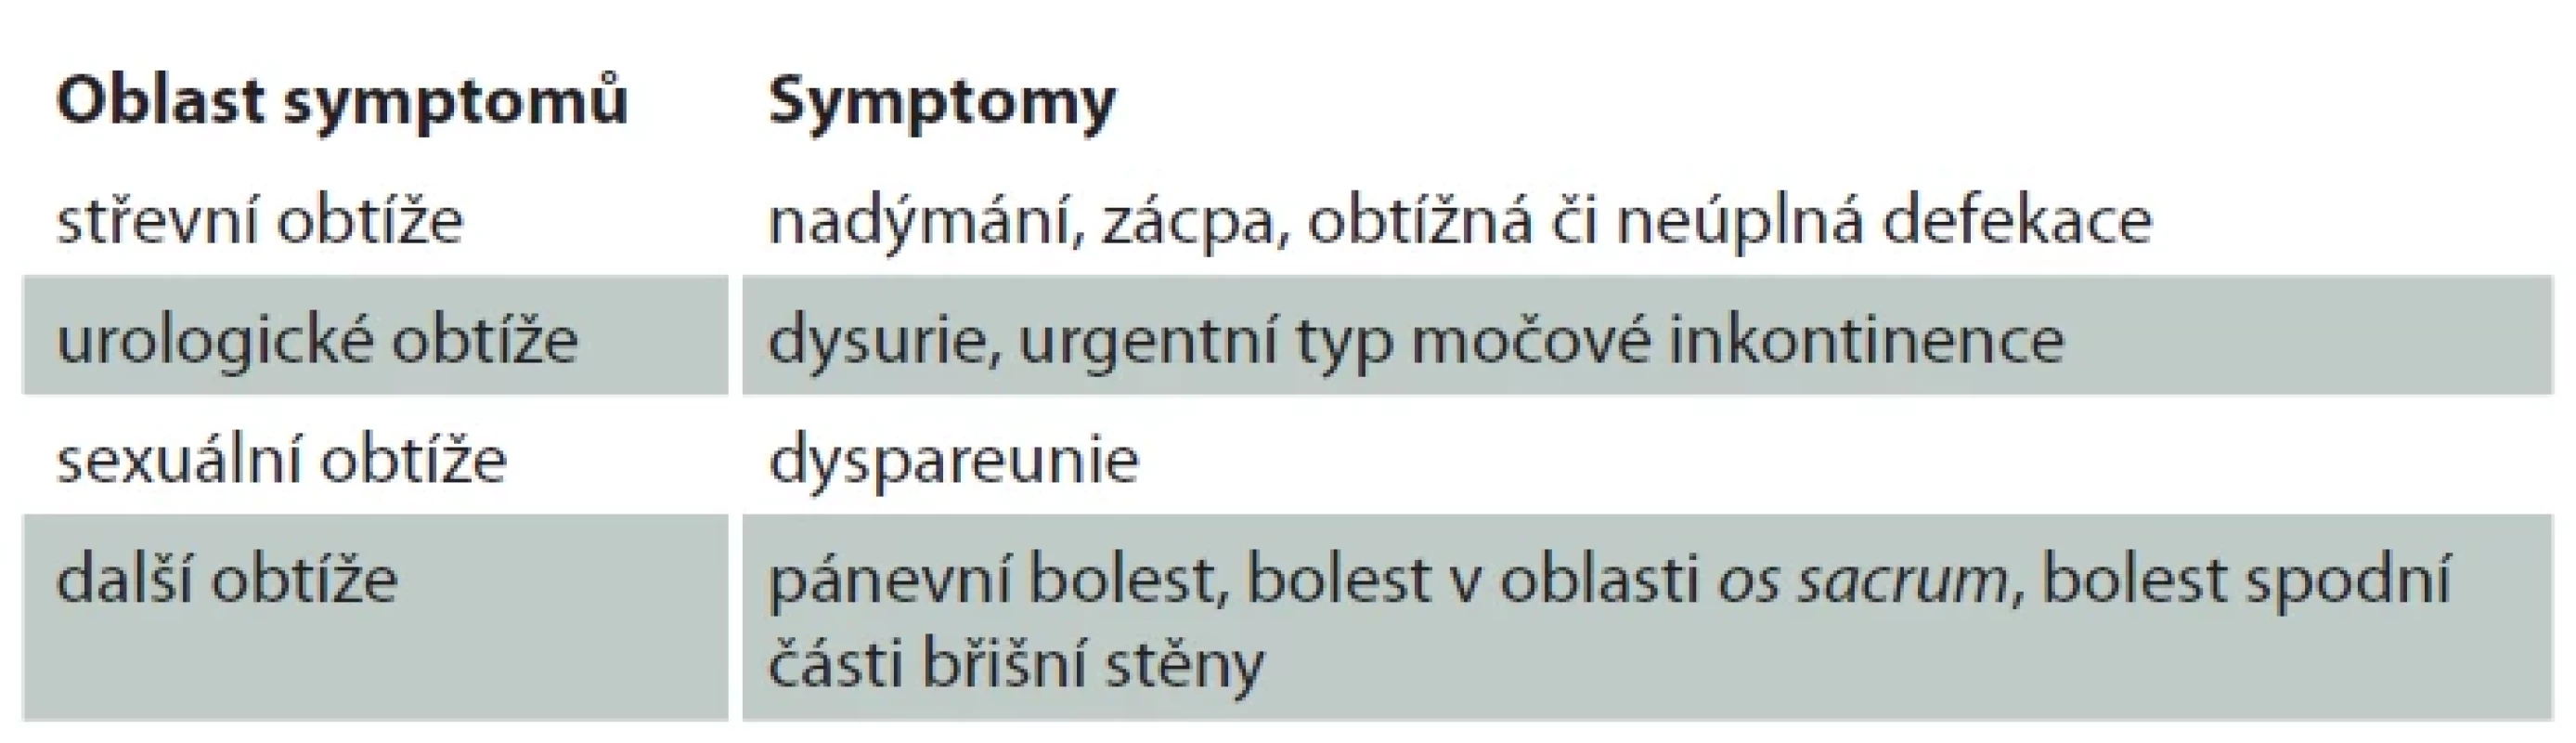 Symptomy spojené s neschopností relaxace pánevního dna.   Tab. 2. Symptoms associated with the inability to relax the pelvic fl oor.